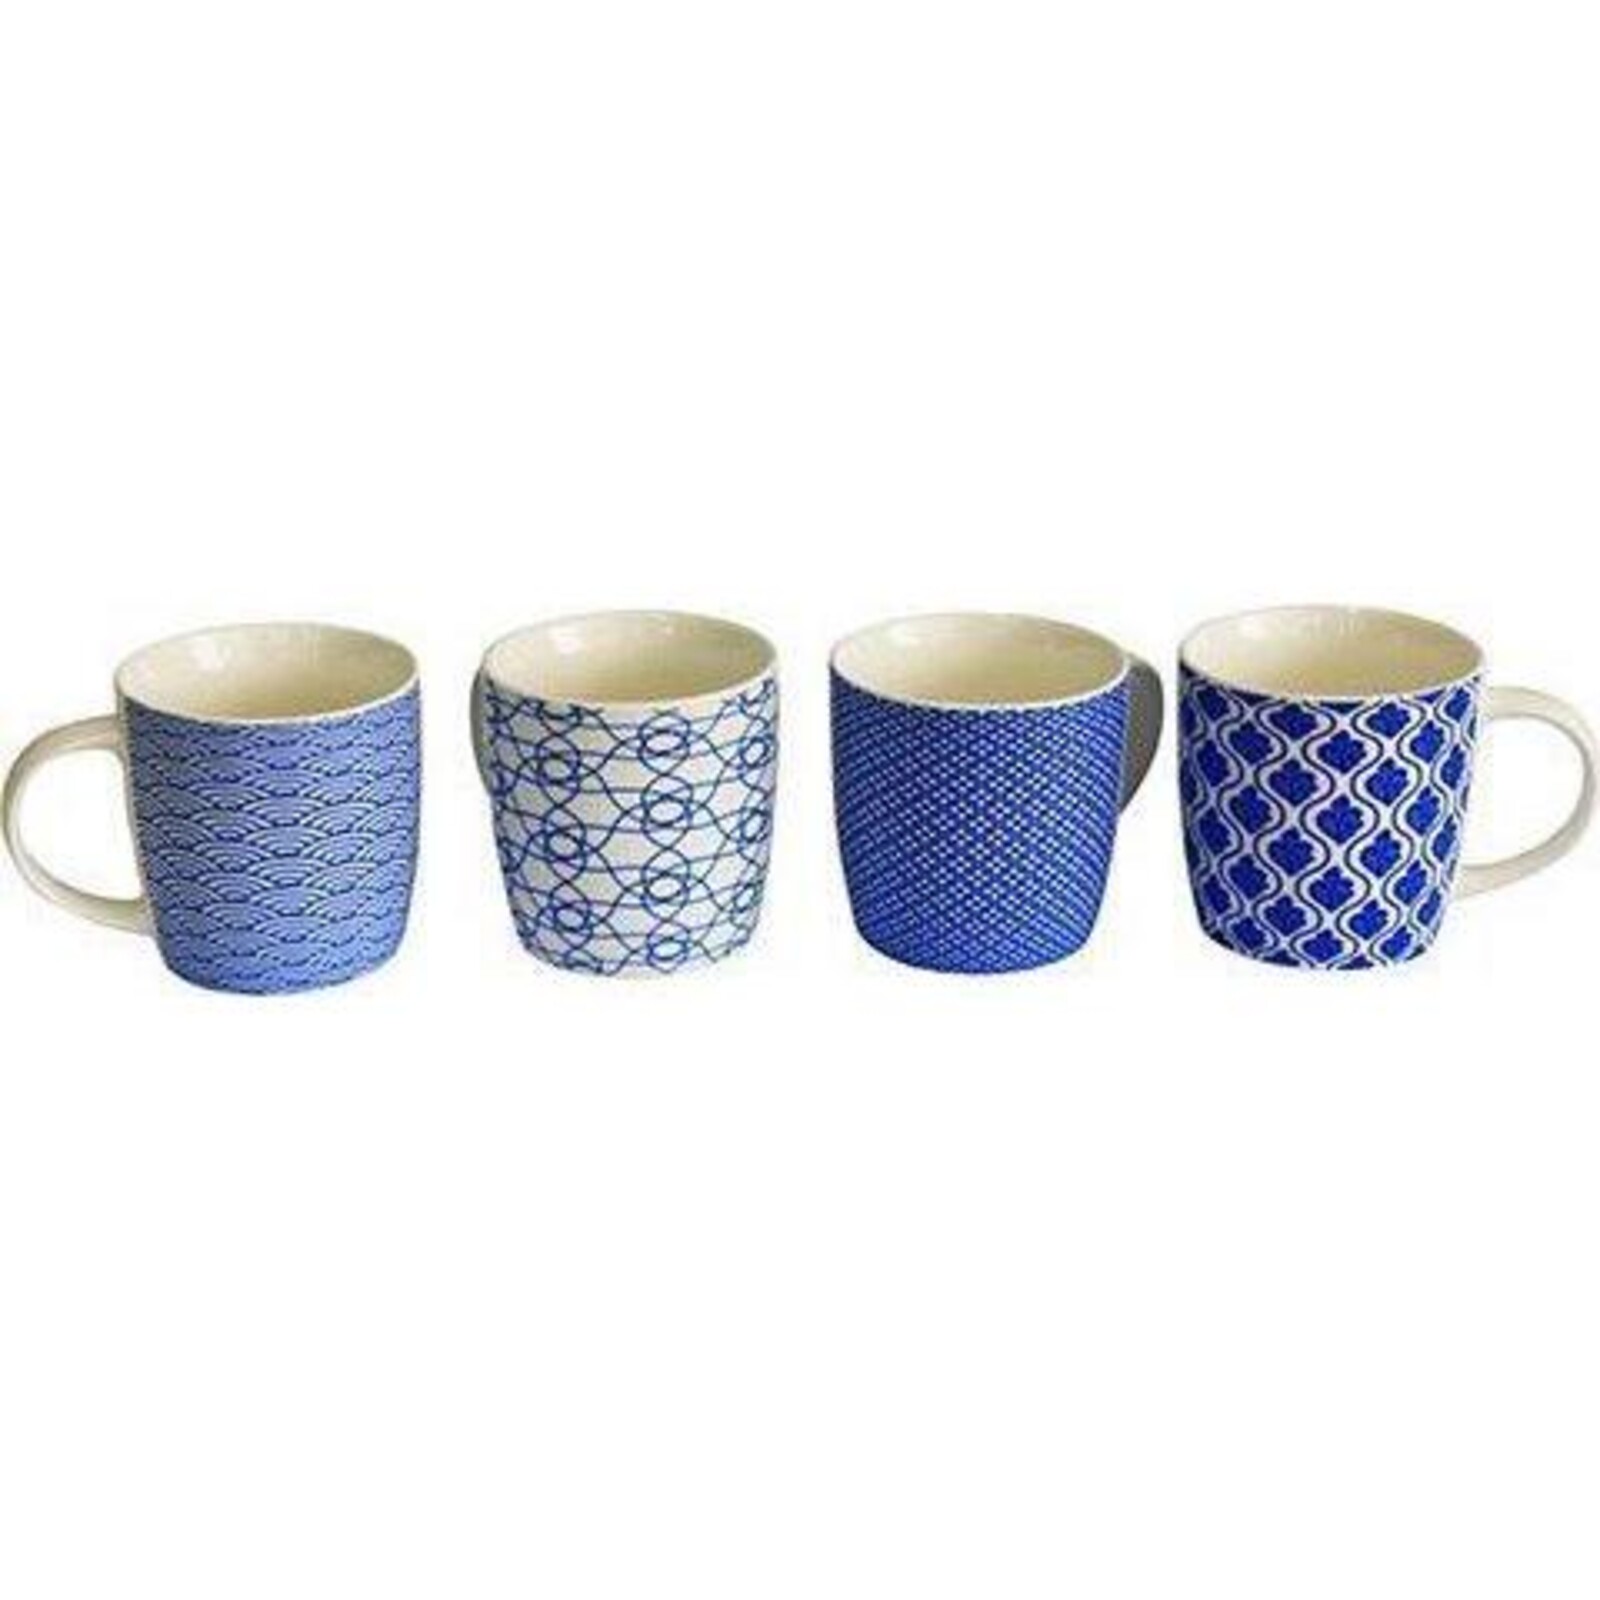 Coffee Mugs Pattern Blue Retro 4 Asst